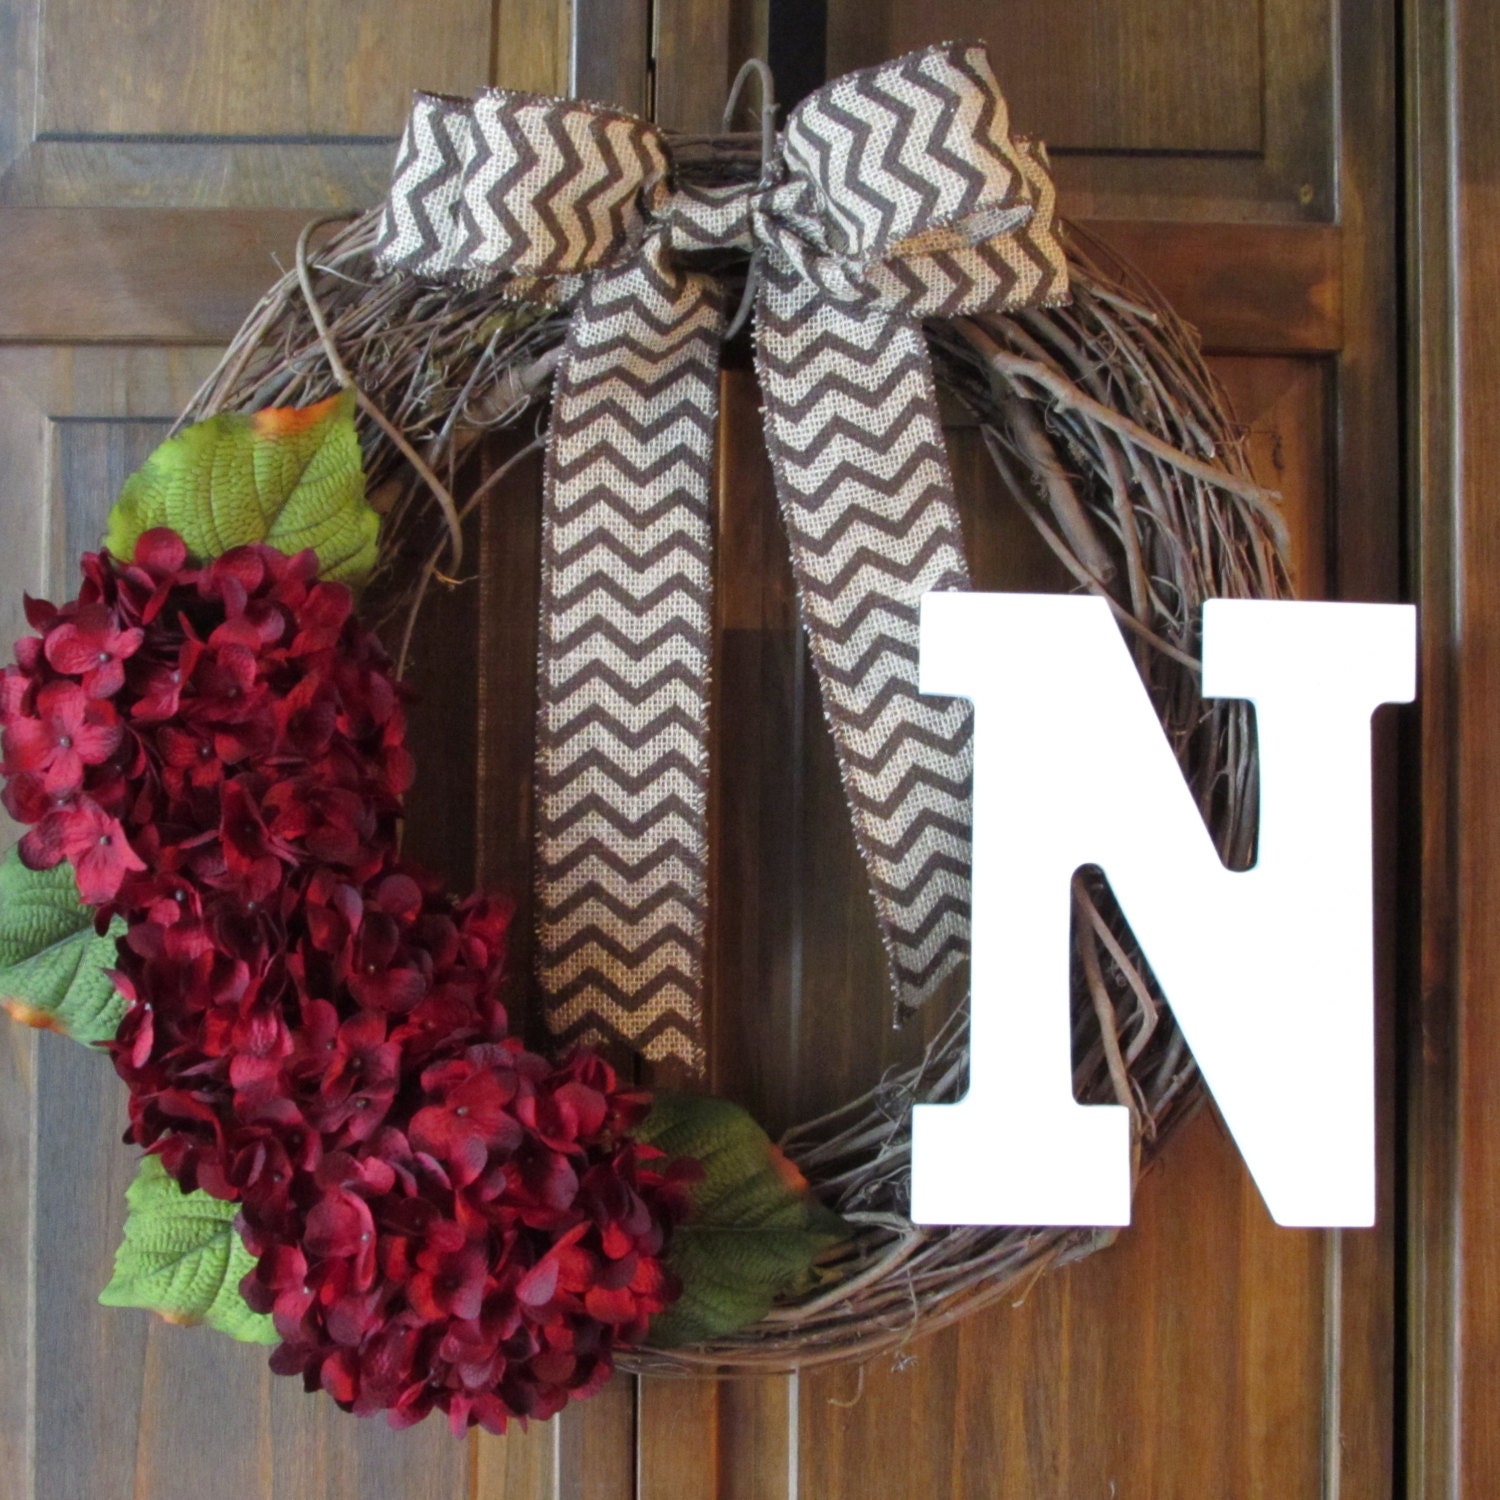 Hydrangea Grapevine Wreath with Monogram | Door Wreath with Initial | Monogrammed Wreath for Christmas